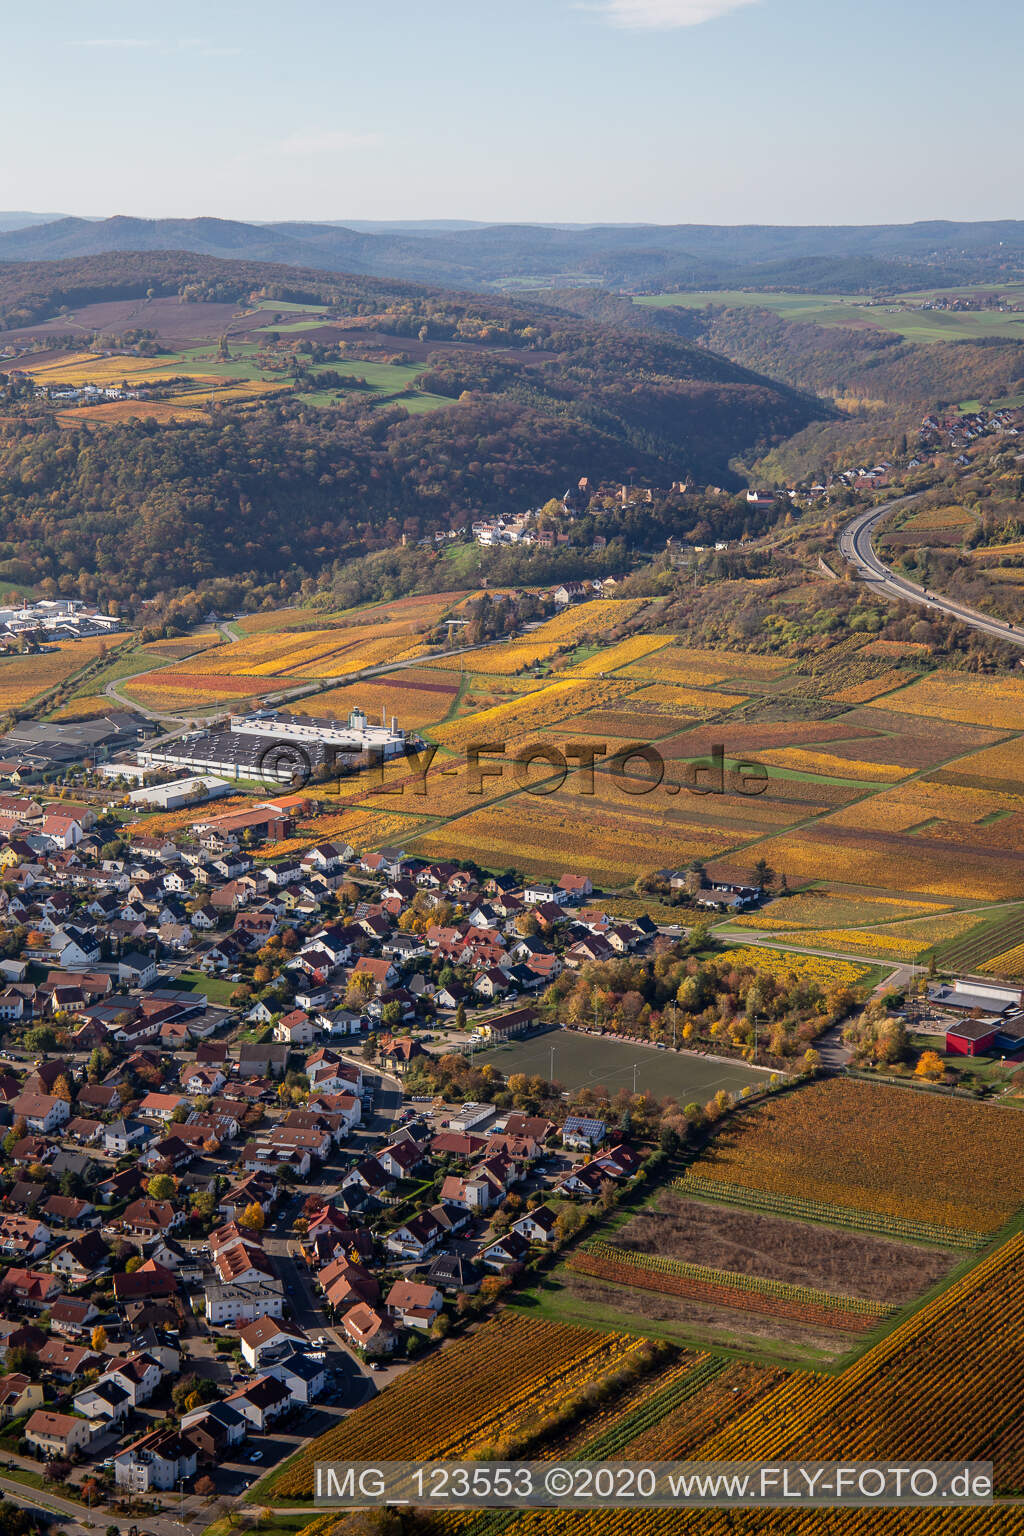 District Sausenheim in Grünstadt in the state Rhineland-Palatinate, Germany